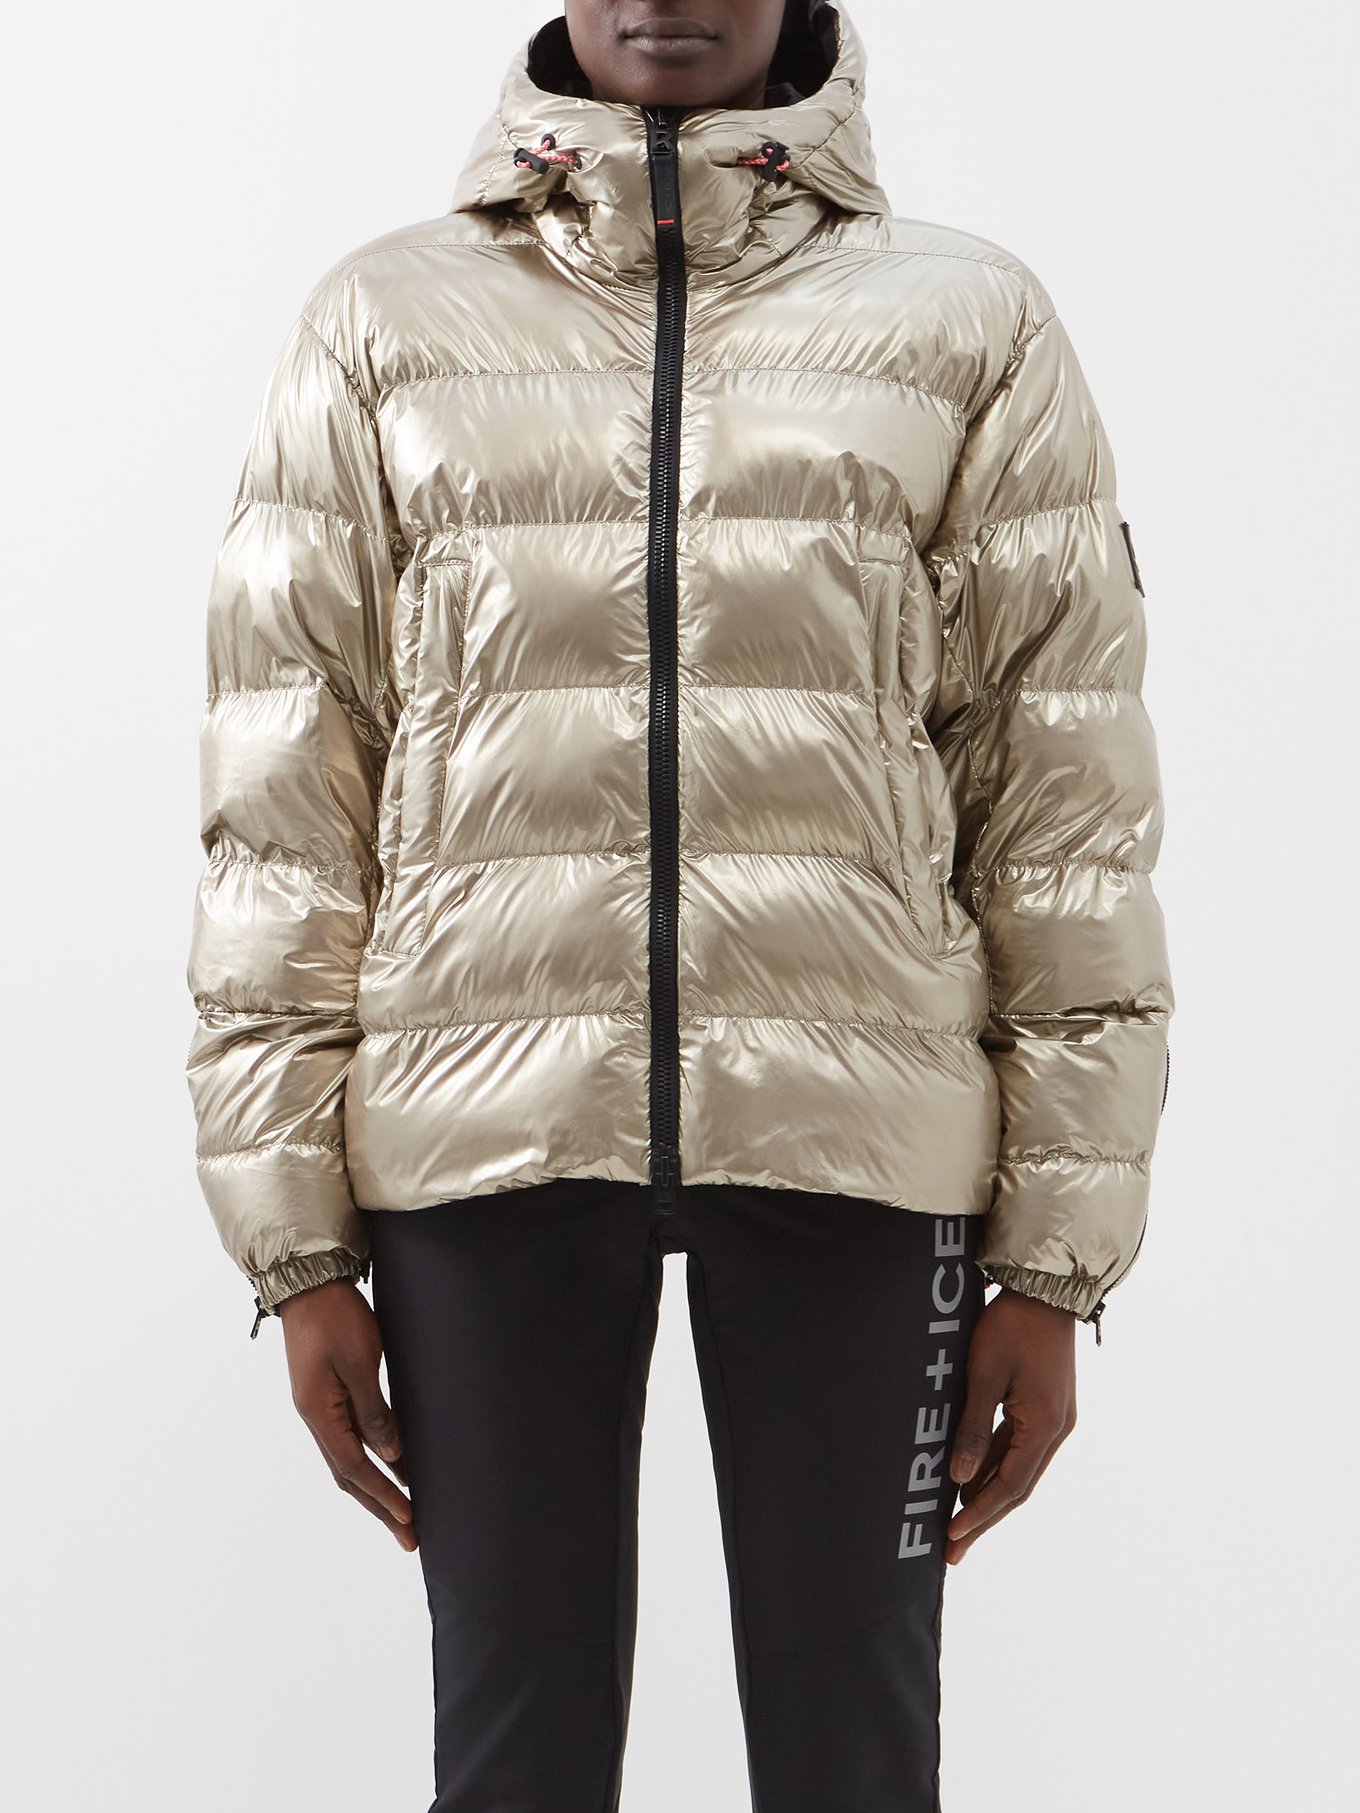 Gold Raissa2 hooded quilted ski jacket, Bogner Fire + Ice